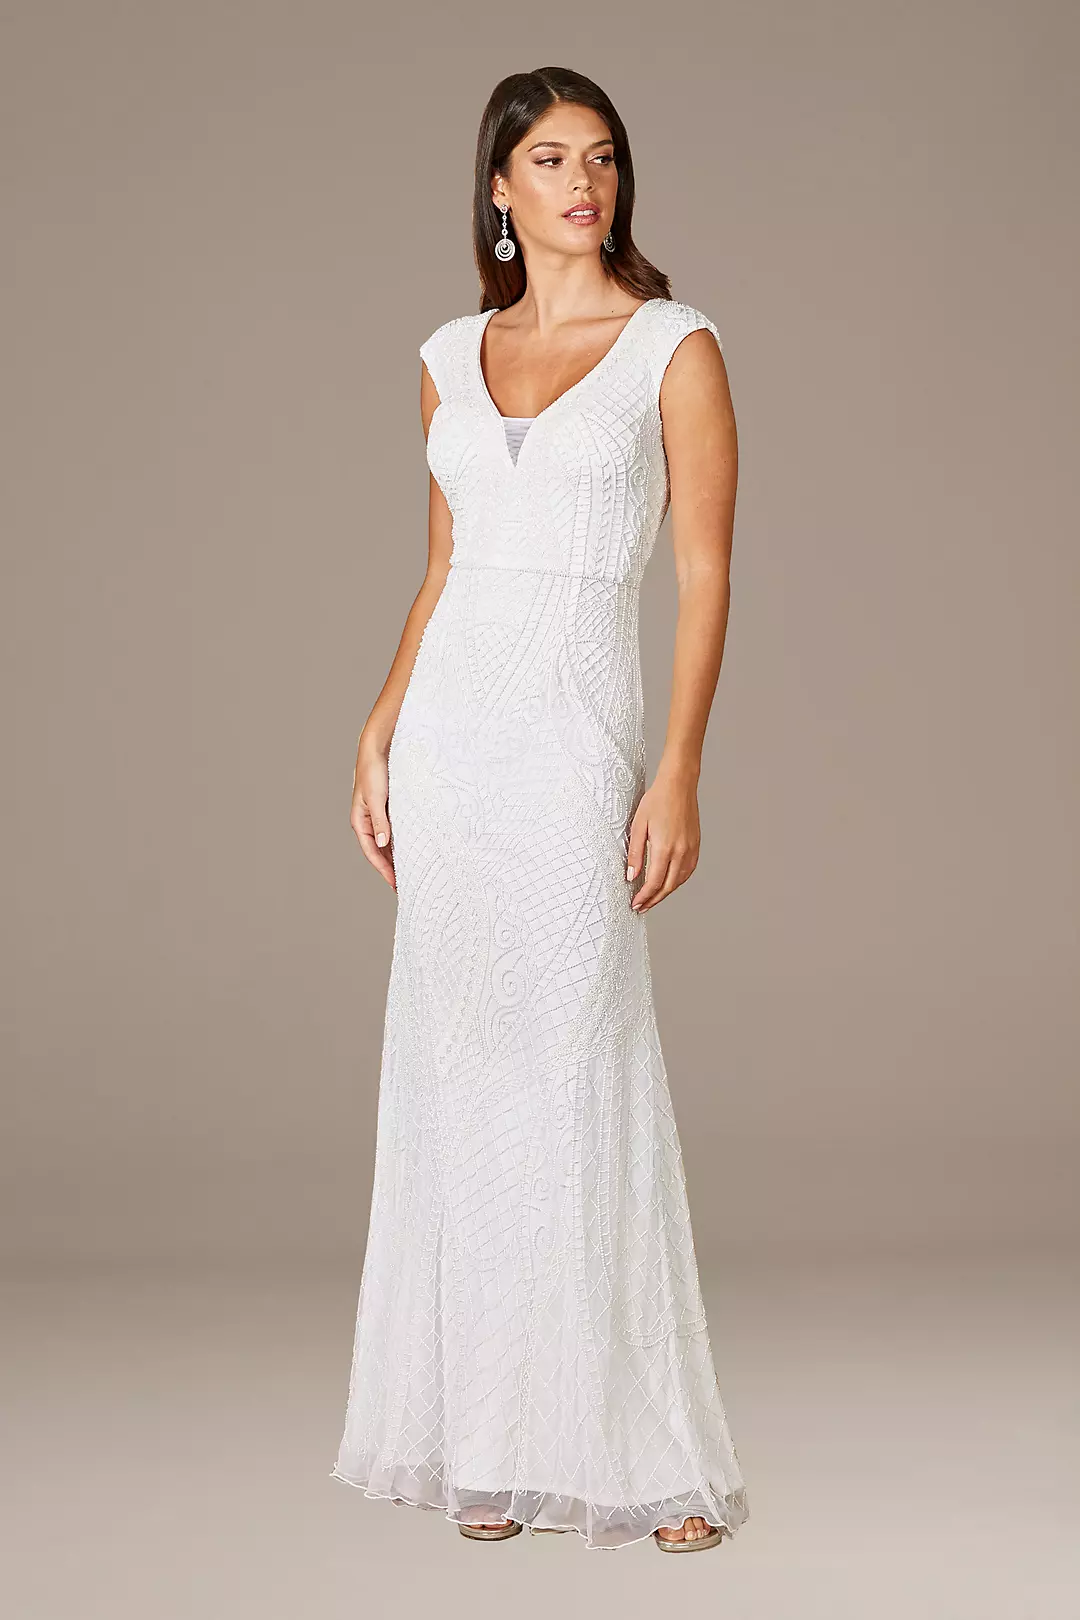 Lara Gwen Beaded Short Sleeve Wedding Dress Image